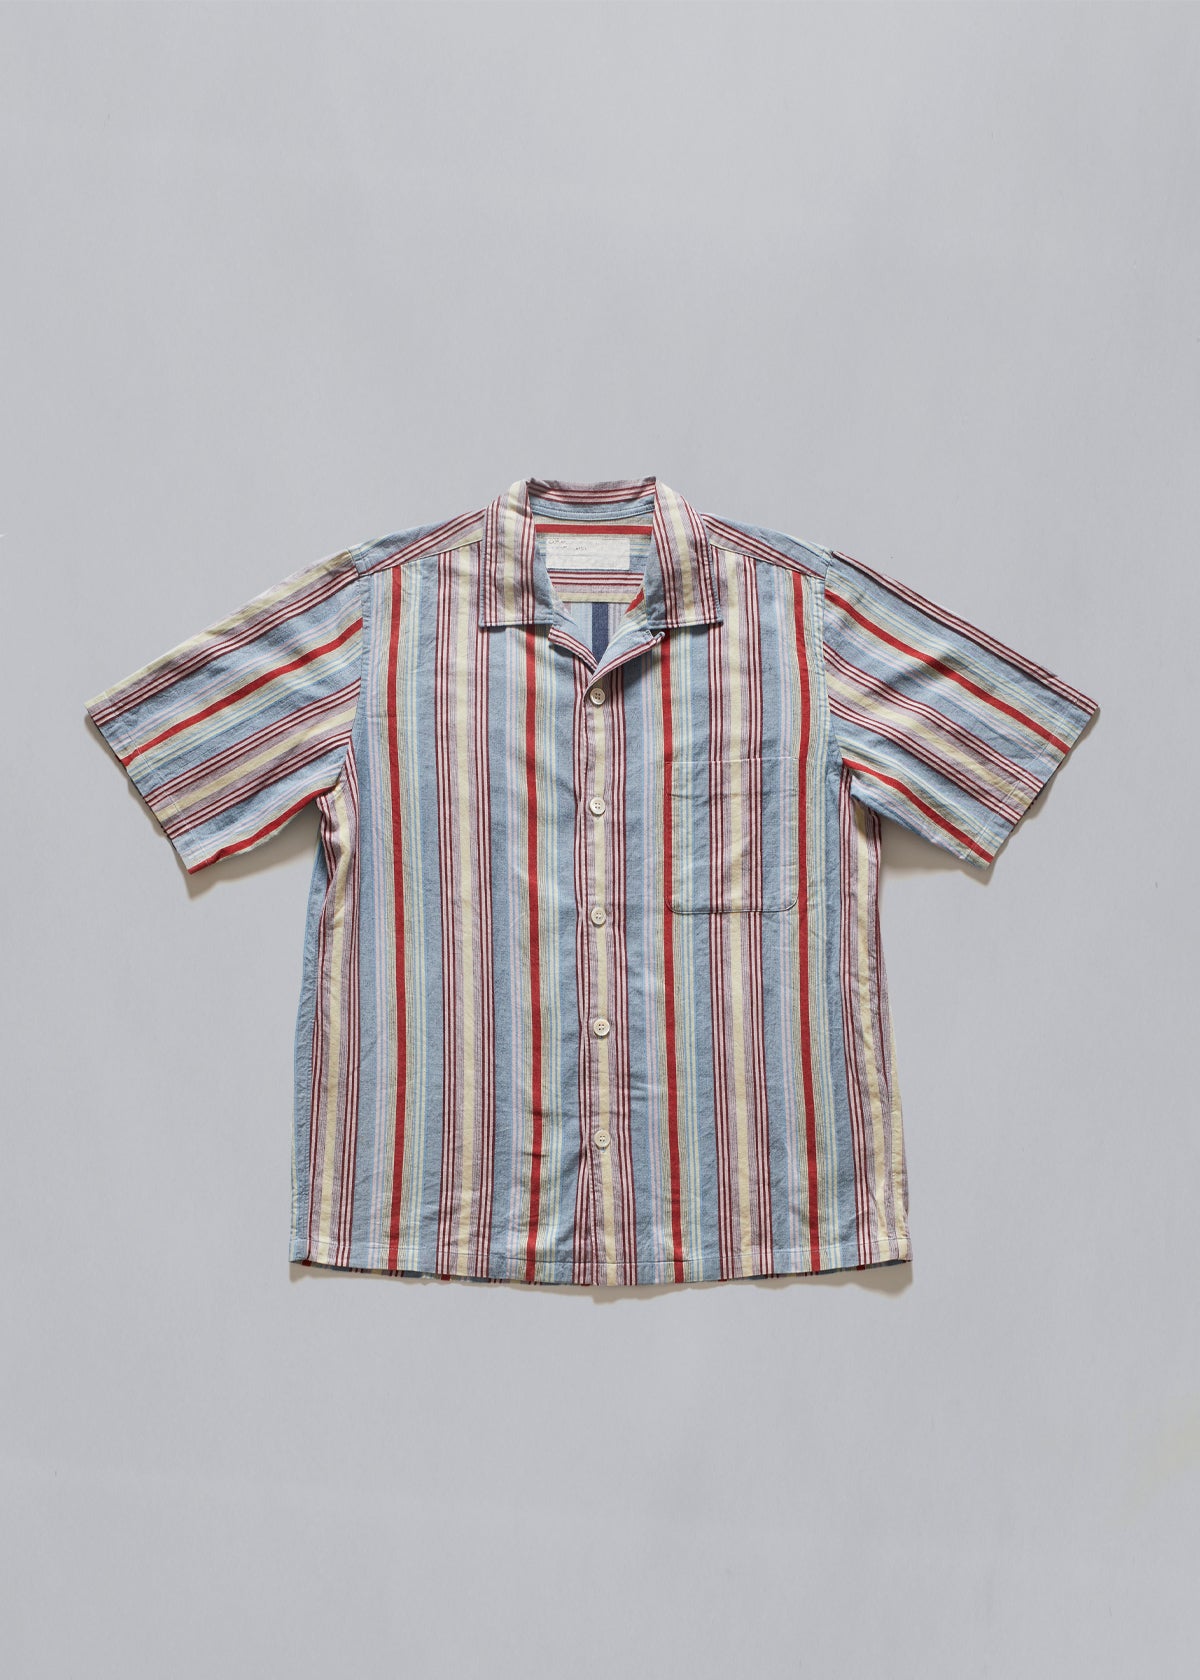 CDGH Multicolor Striped Shirt 1980's - Medium - The Archivist Store